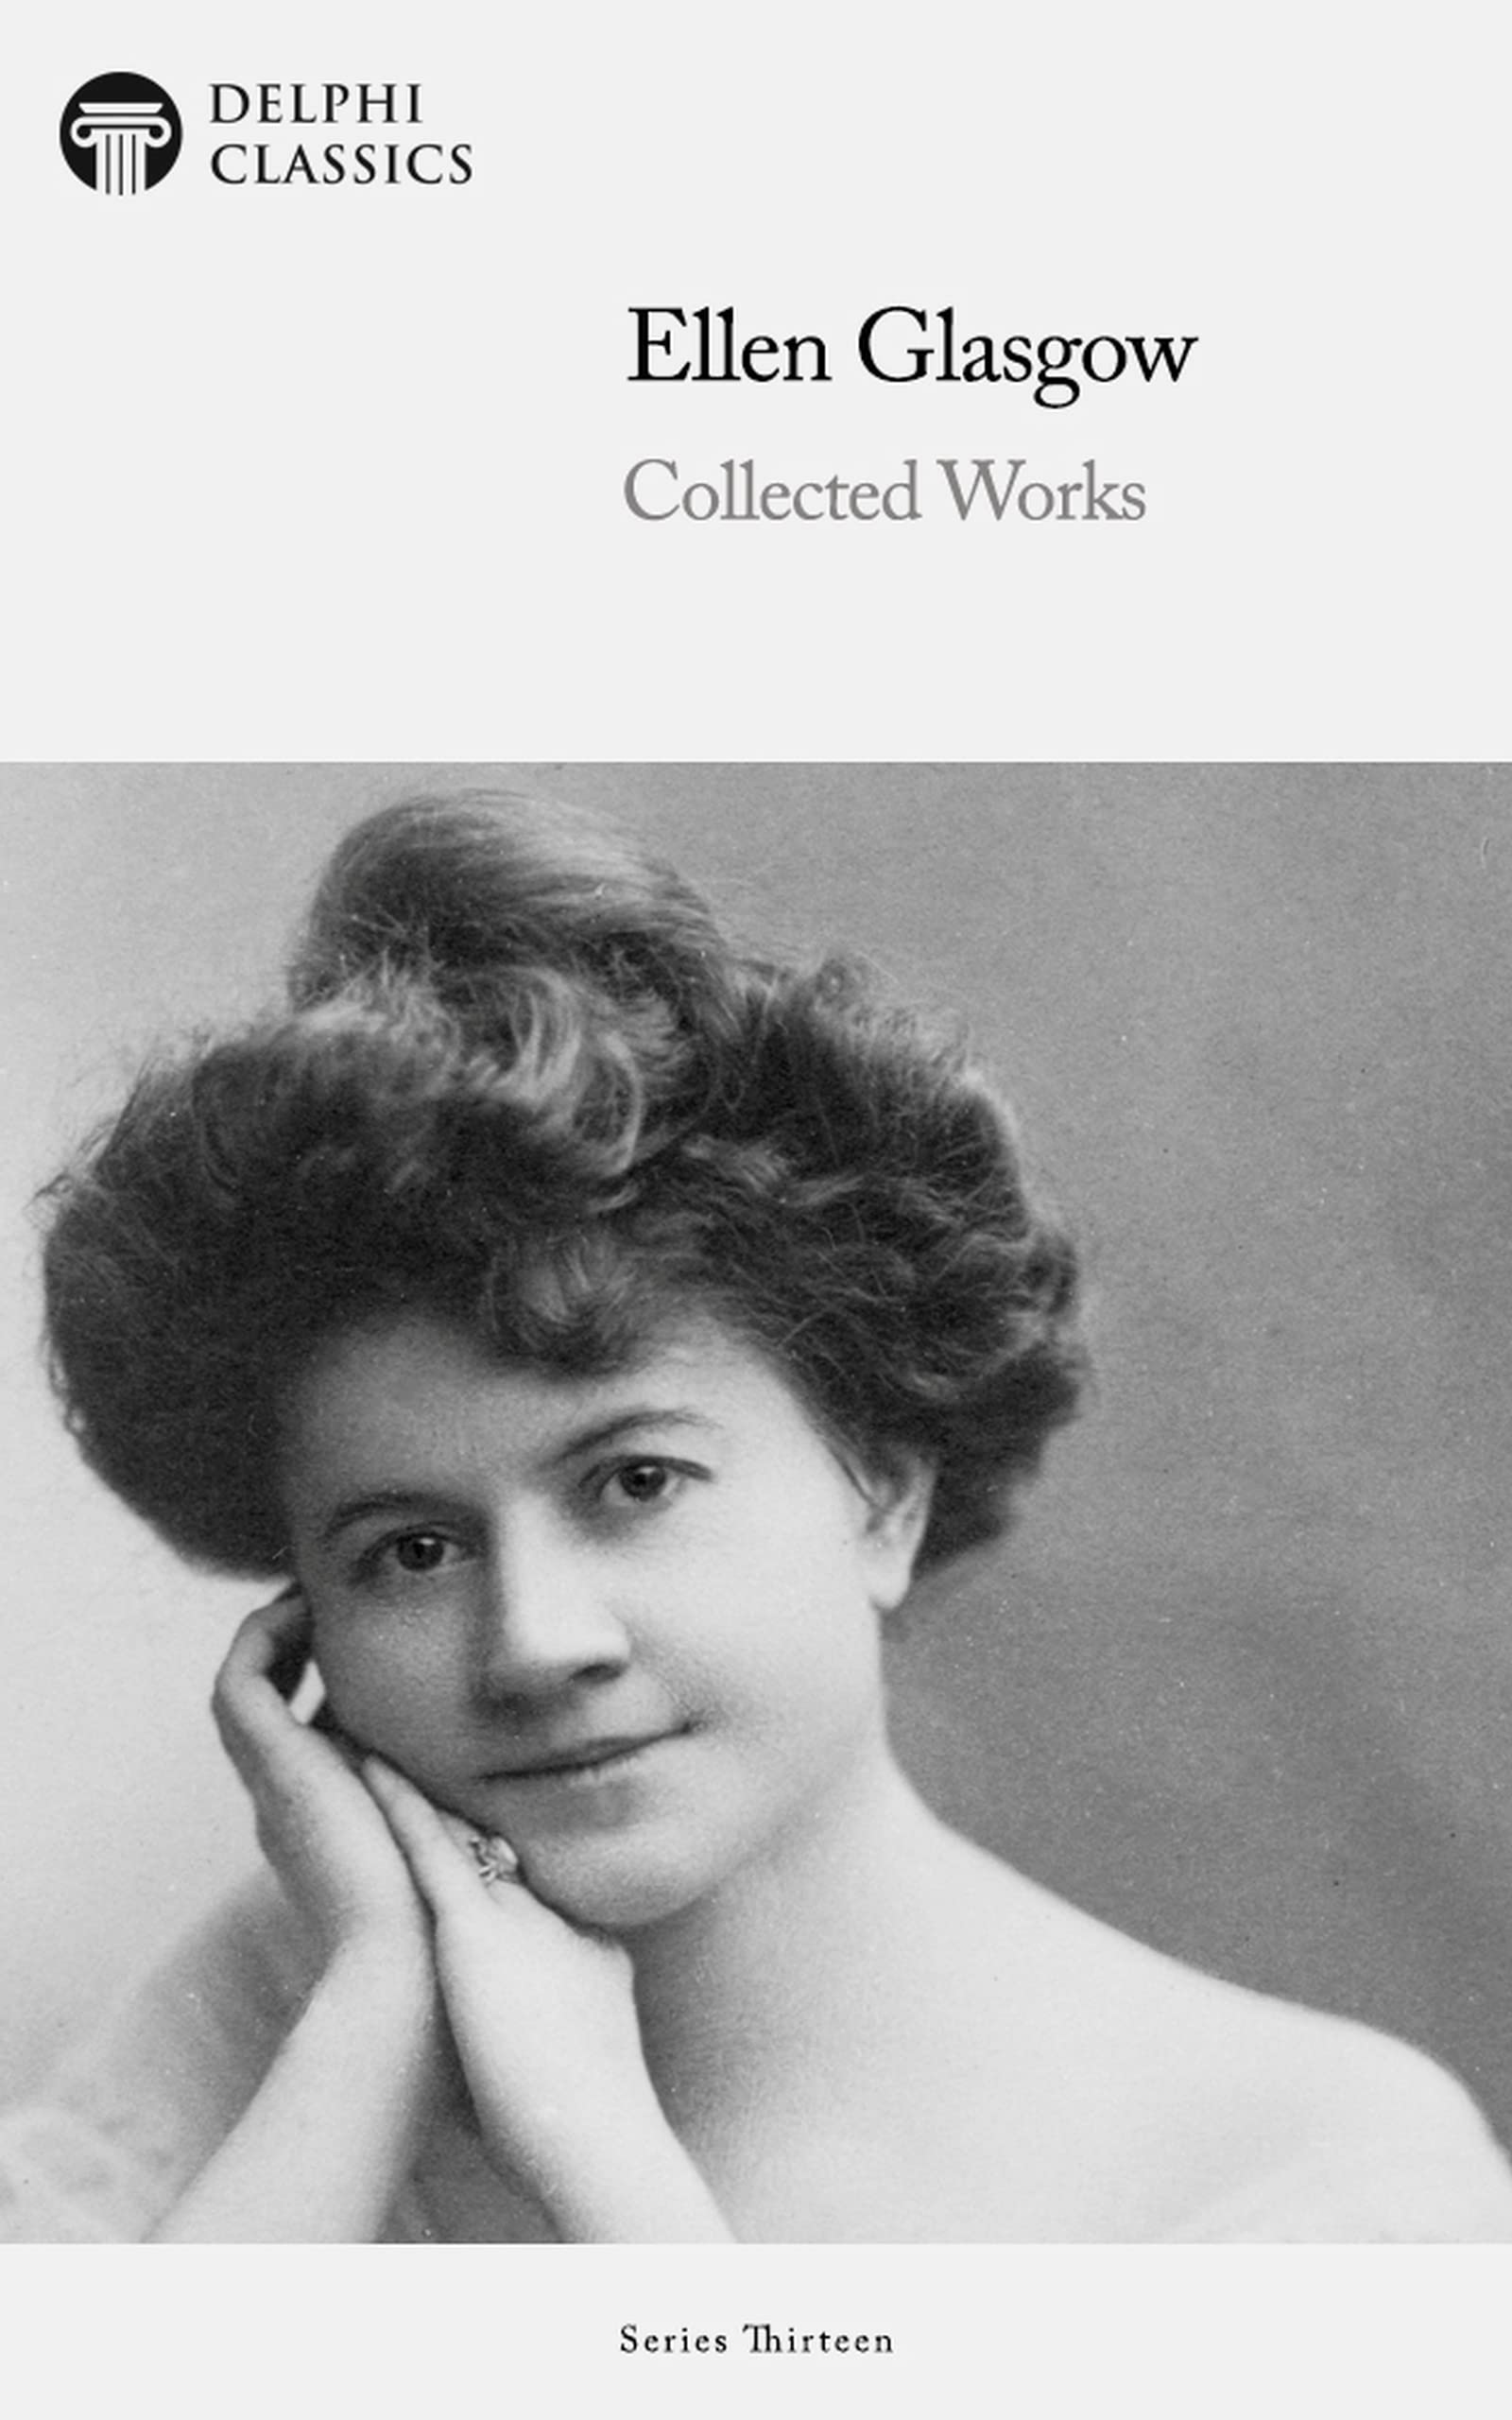 Delphi Collected Works of Ellen Glasgow